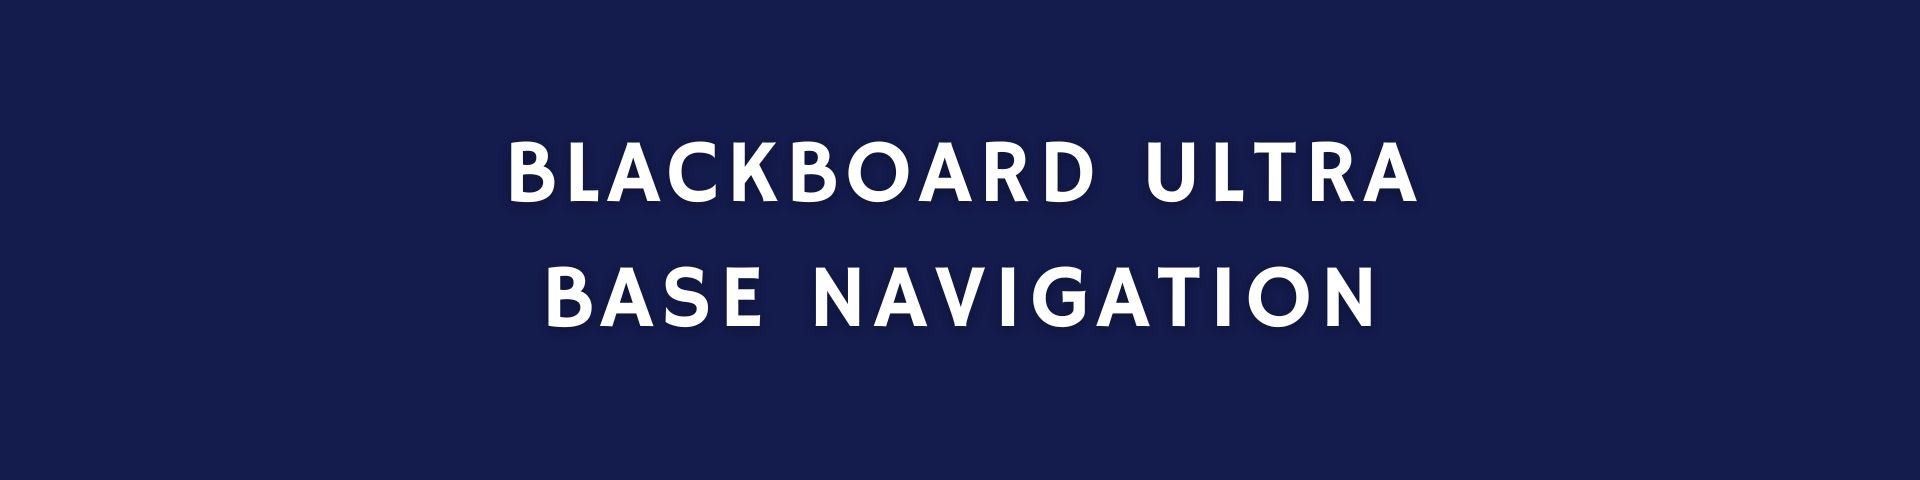 Blackboard Ultra Base Navigation